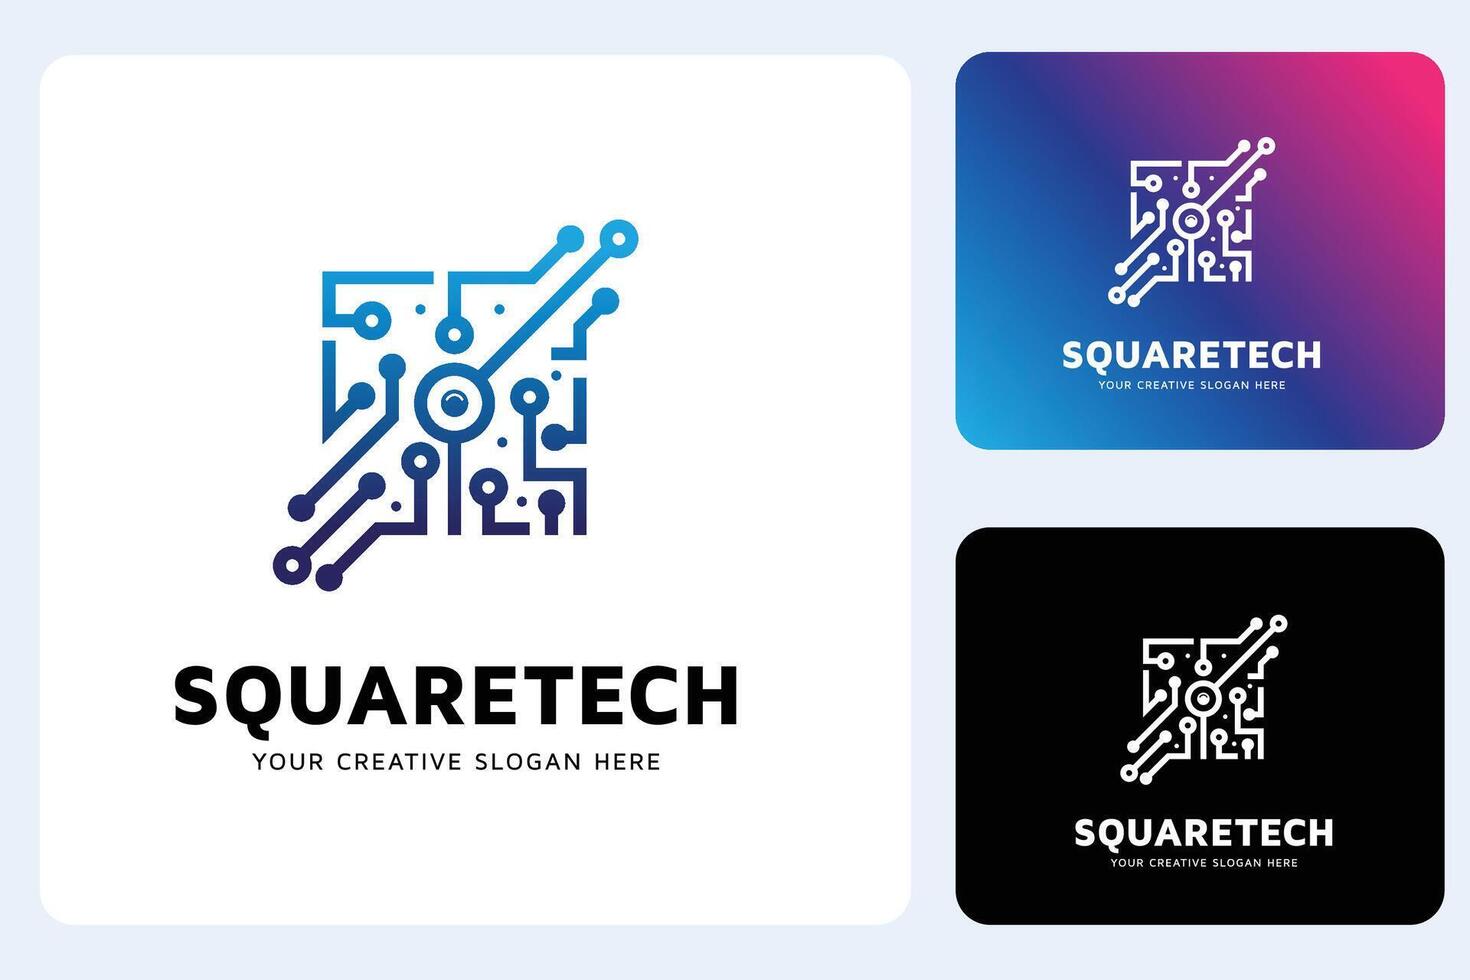 Square Tech Logo Design Template vector